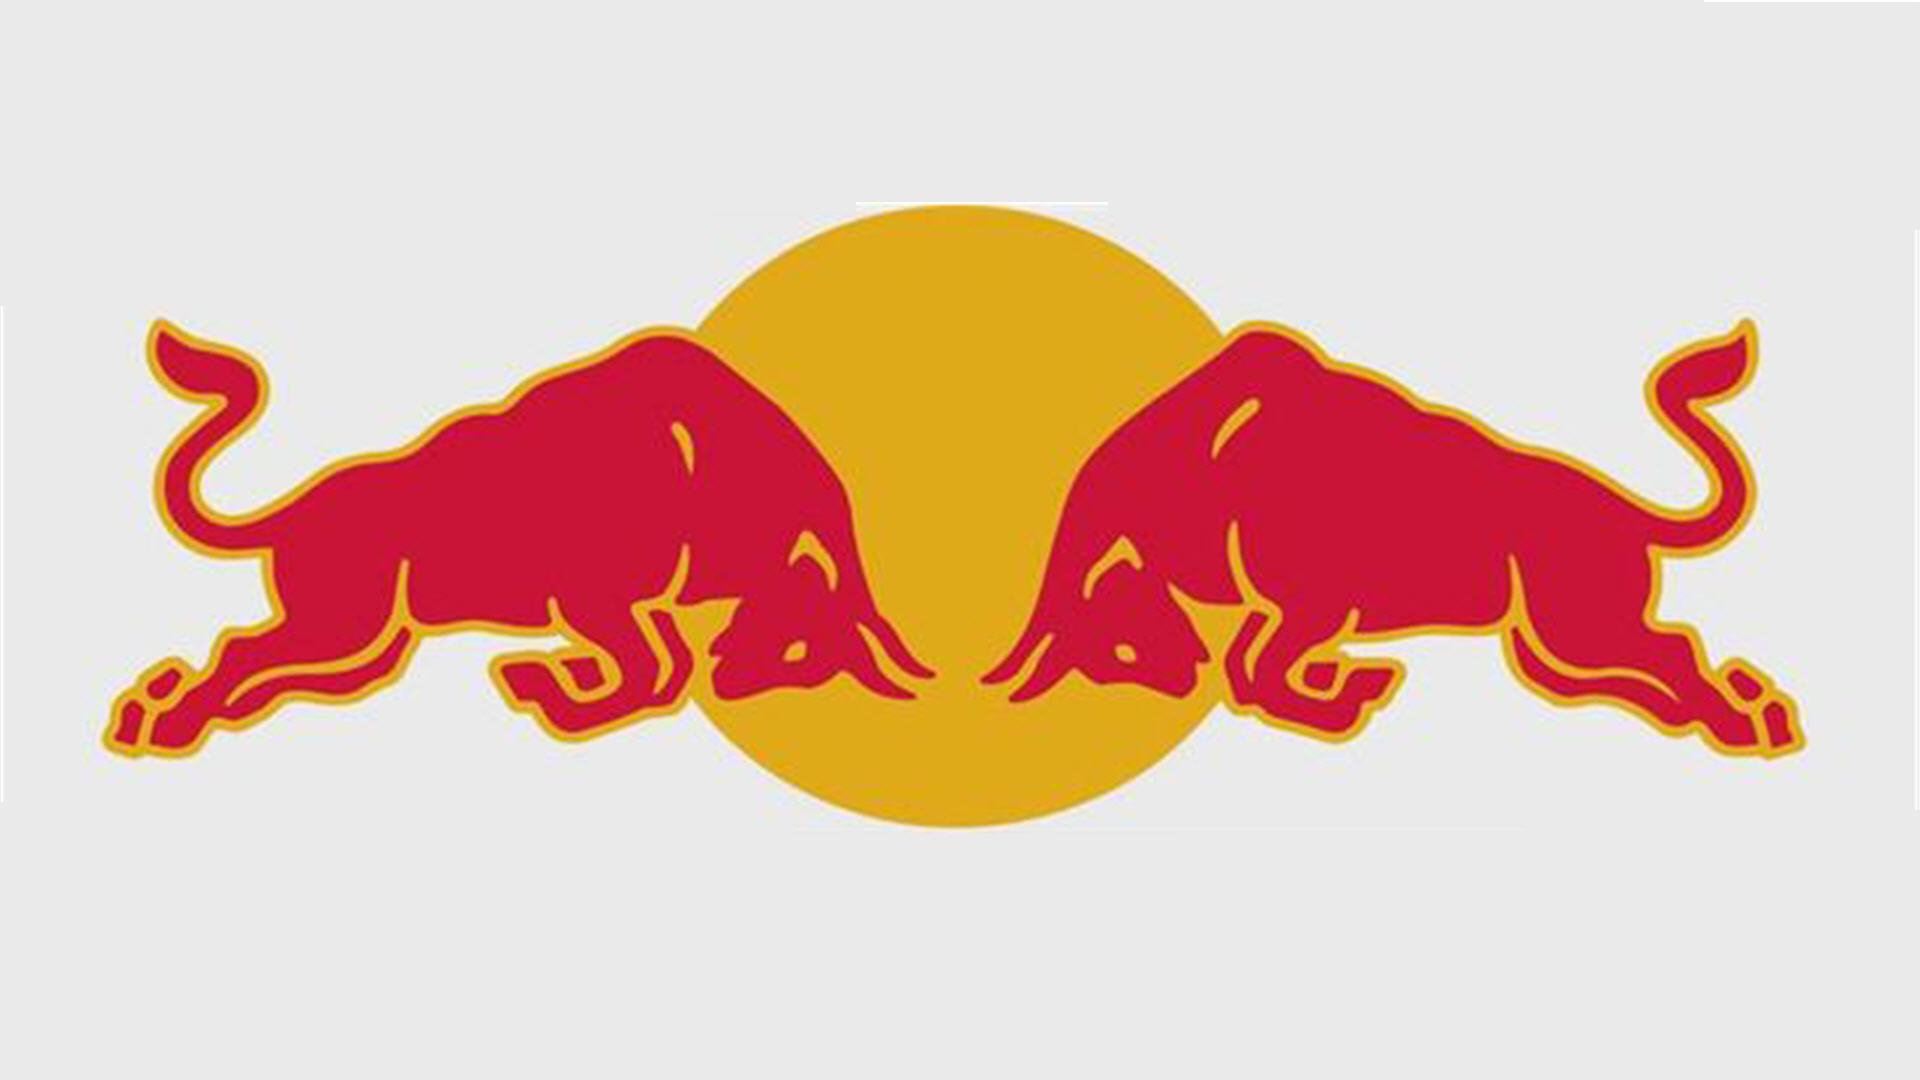 Free Download Red Bull Logo Vector Images 19x1080 For Your Desktop Mobile Tablet Explore 71 Red Bull Logo Wallpaper Hd Red Wallpaper Red Bull Wallpaper Red Bull Racing Wallpaper